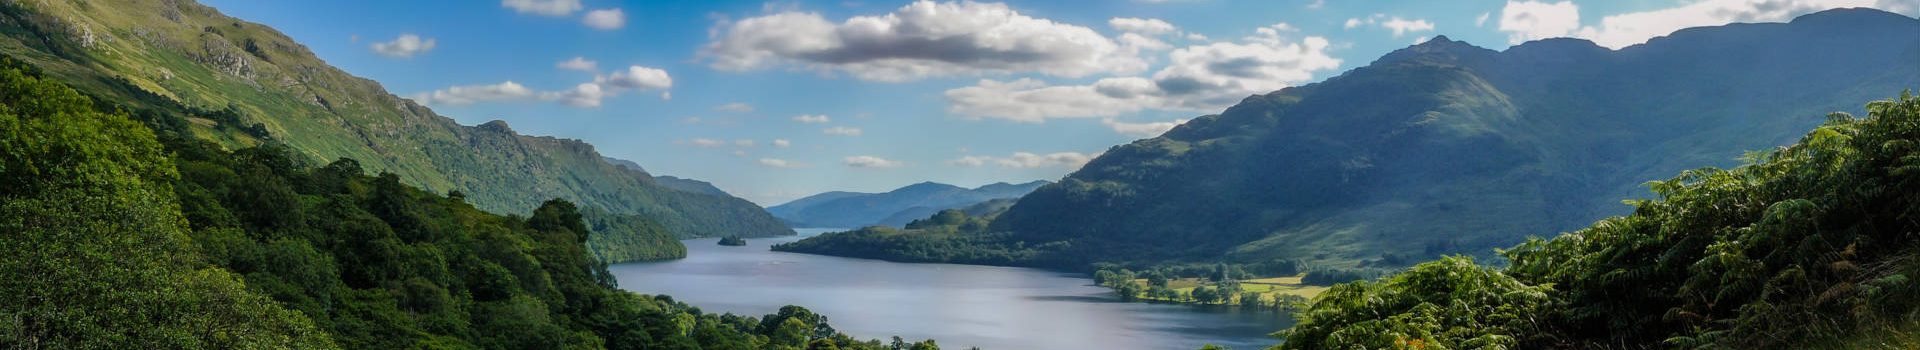 View over Loch Lomond in Central Scotland